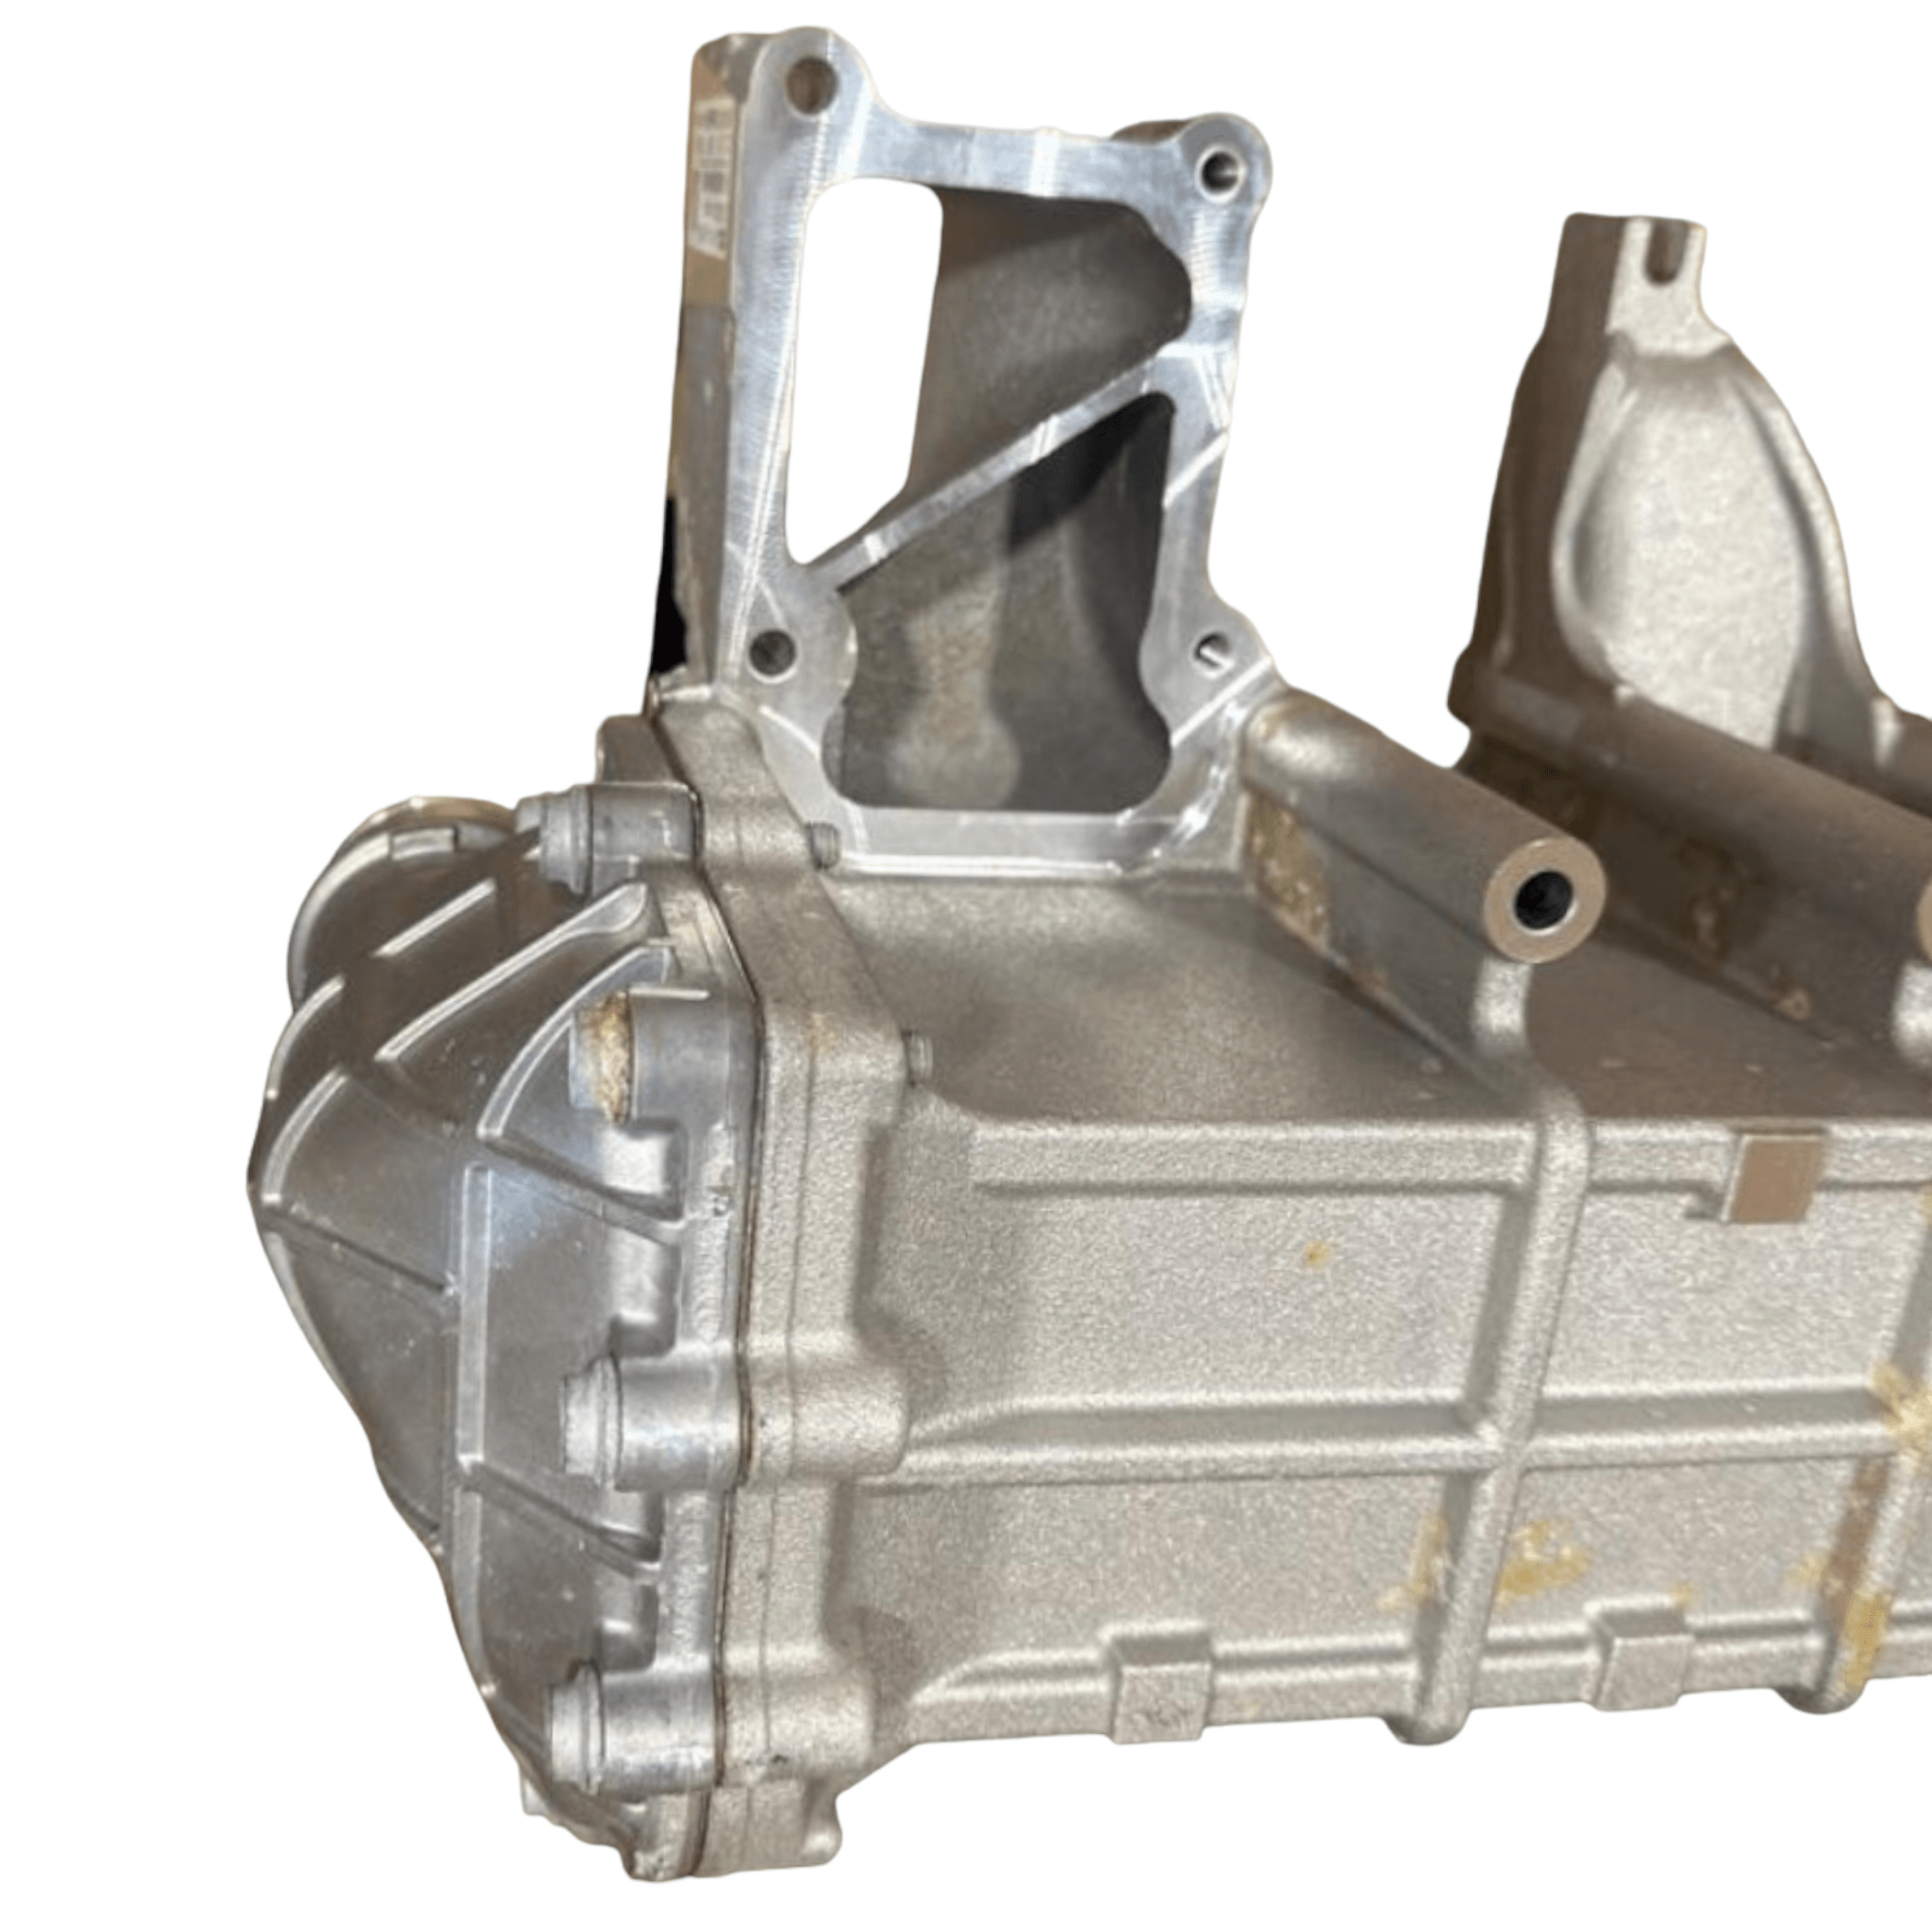 A4711409075 Genuine Detroit Diesel Exhaust Gas Cooler For DD13 - ADVANCED TRUCK PARTS